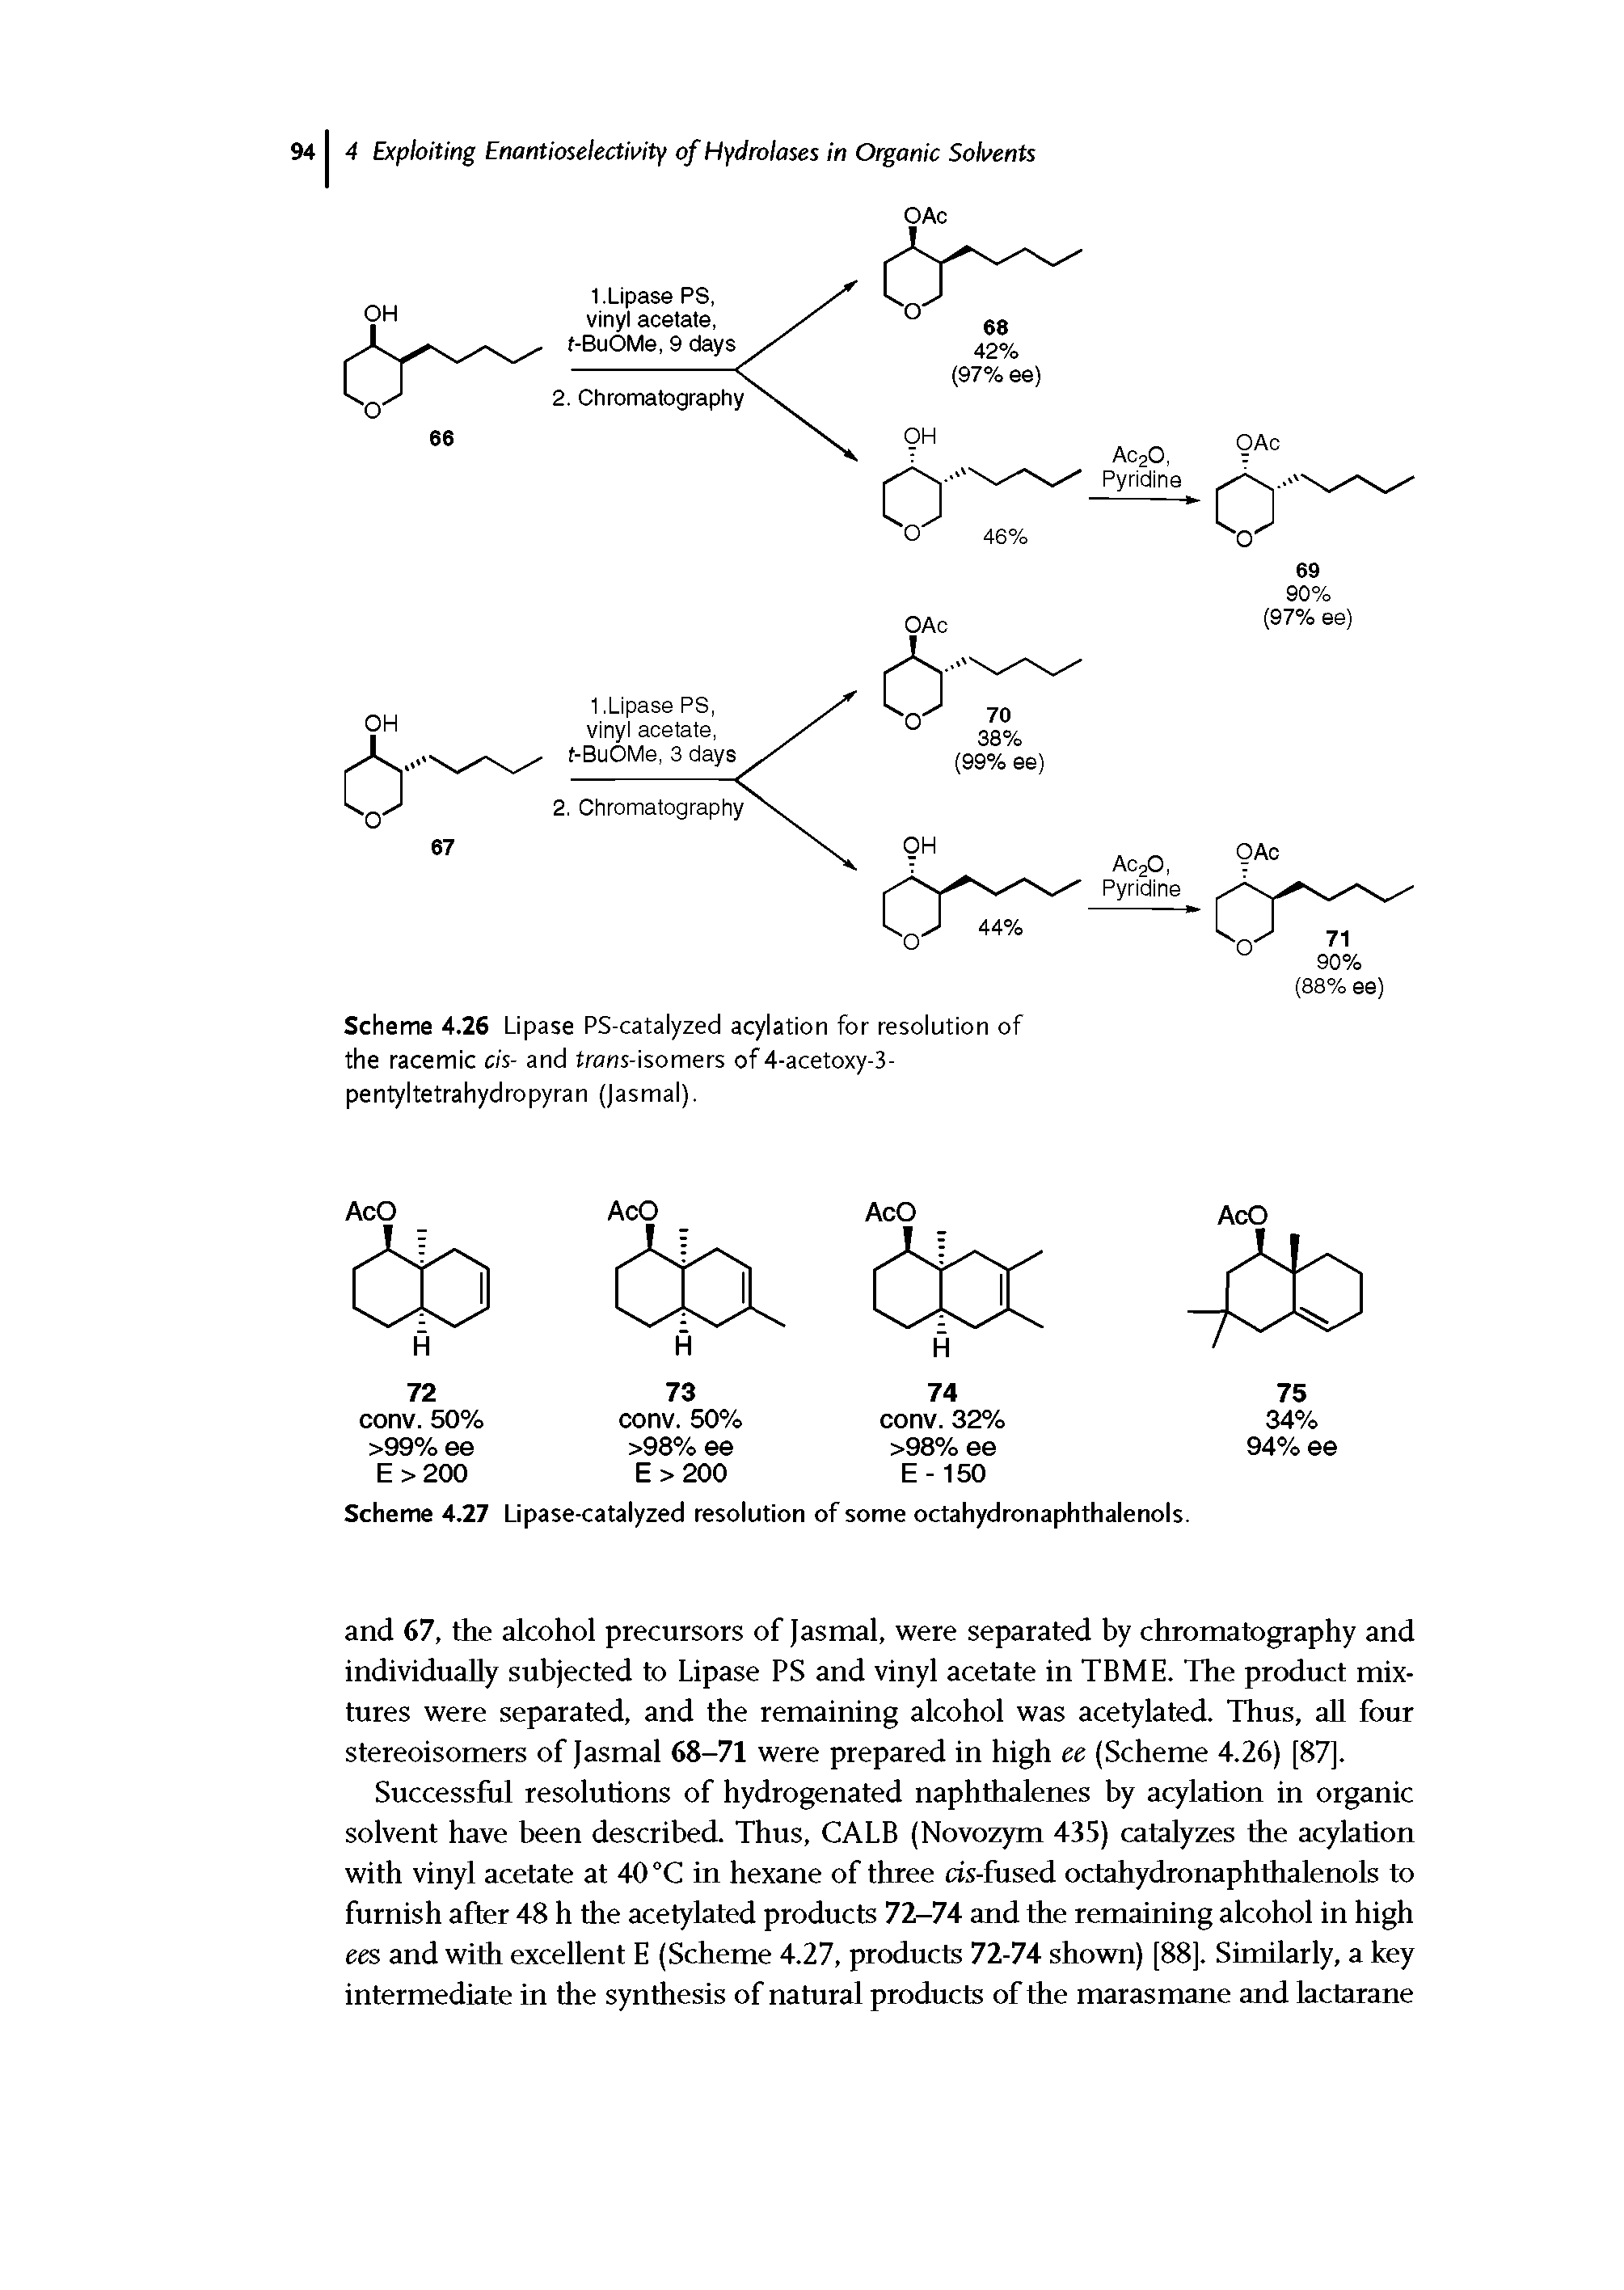 Scheme 4.27 Lipase-catalyzed resolution of some octahydronaphthalenols.